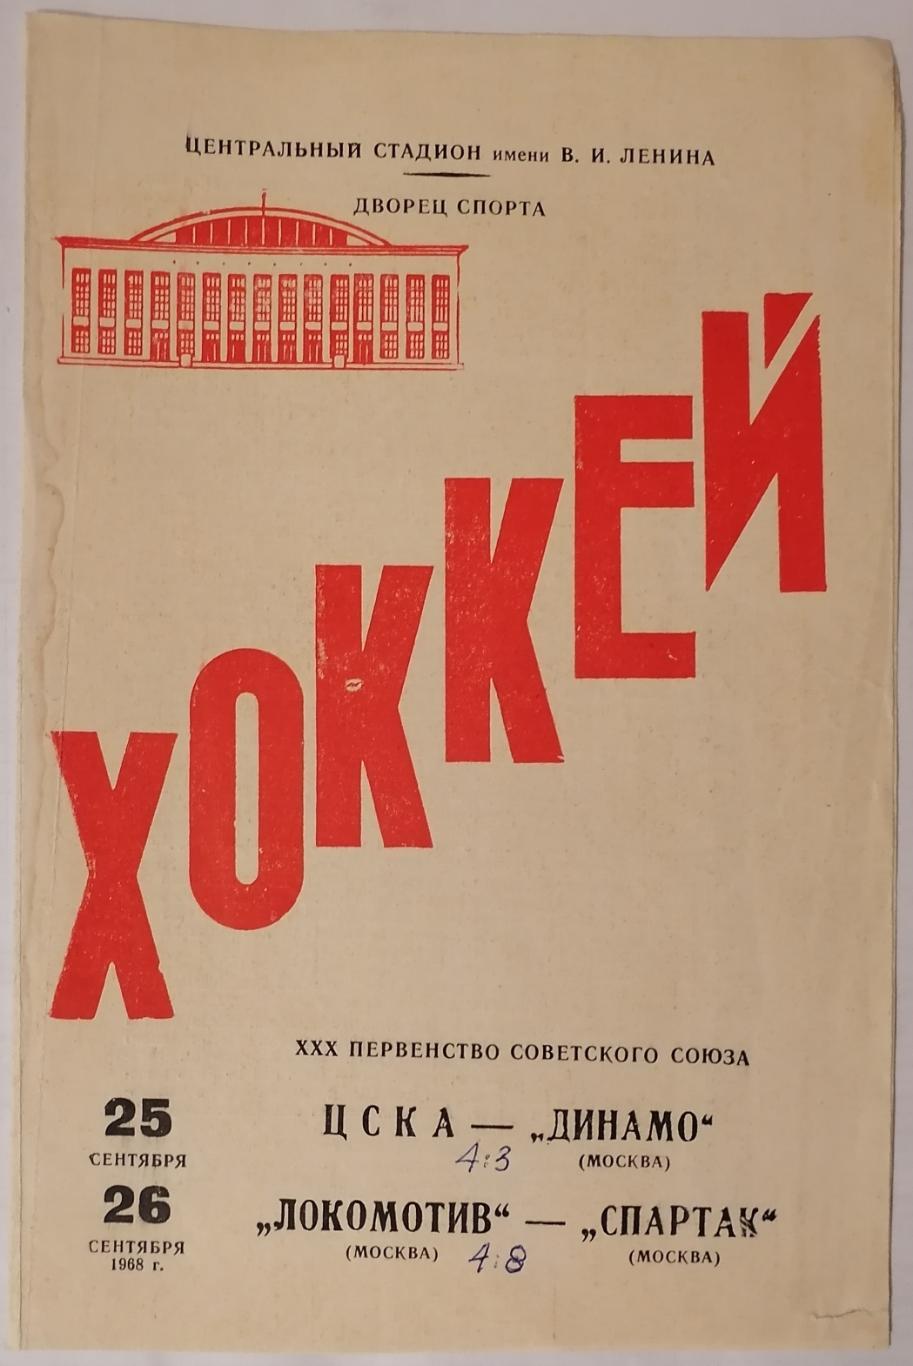 ЦСКА - ДИНАМО МОСКВА и ЛОКОМОТИВ - СПАРТАК МОСКВА 25, 26 сентября 1968 ПРОГРАММА